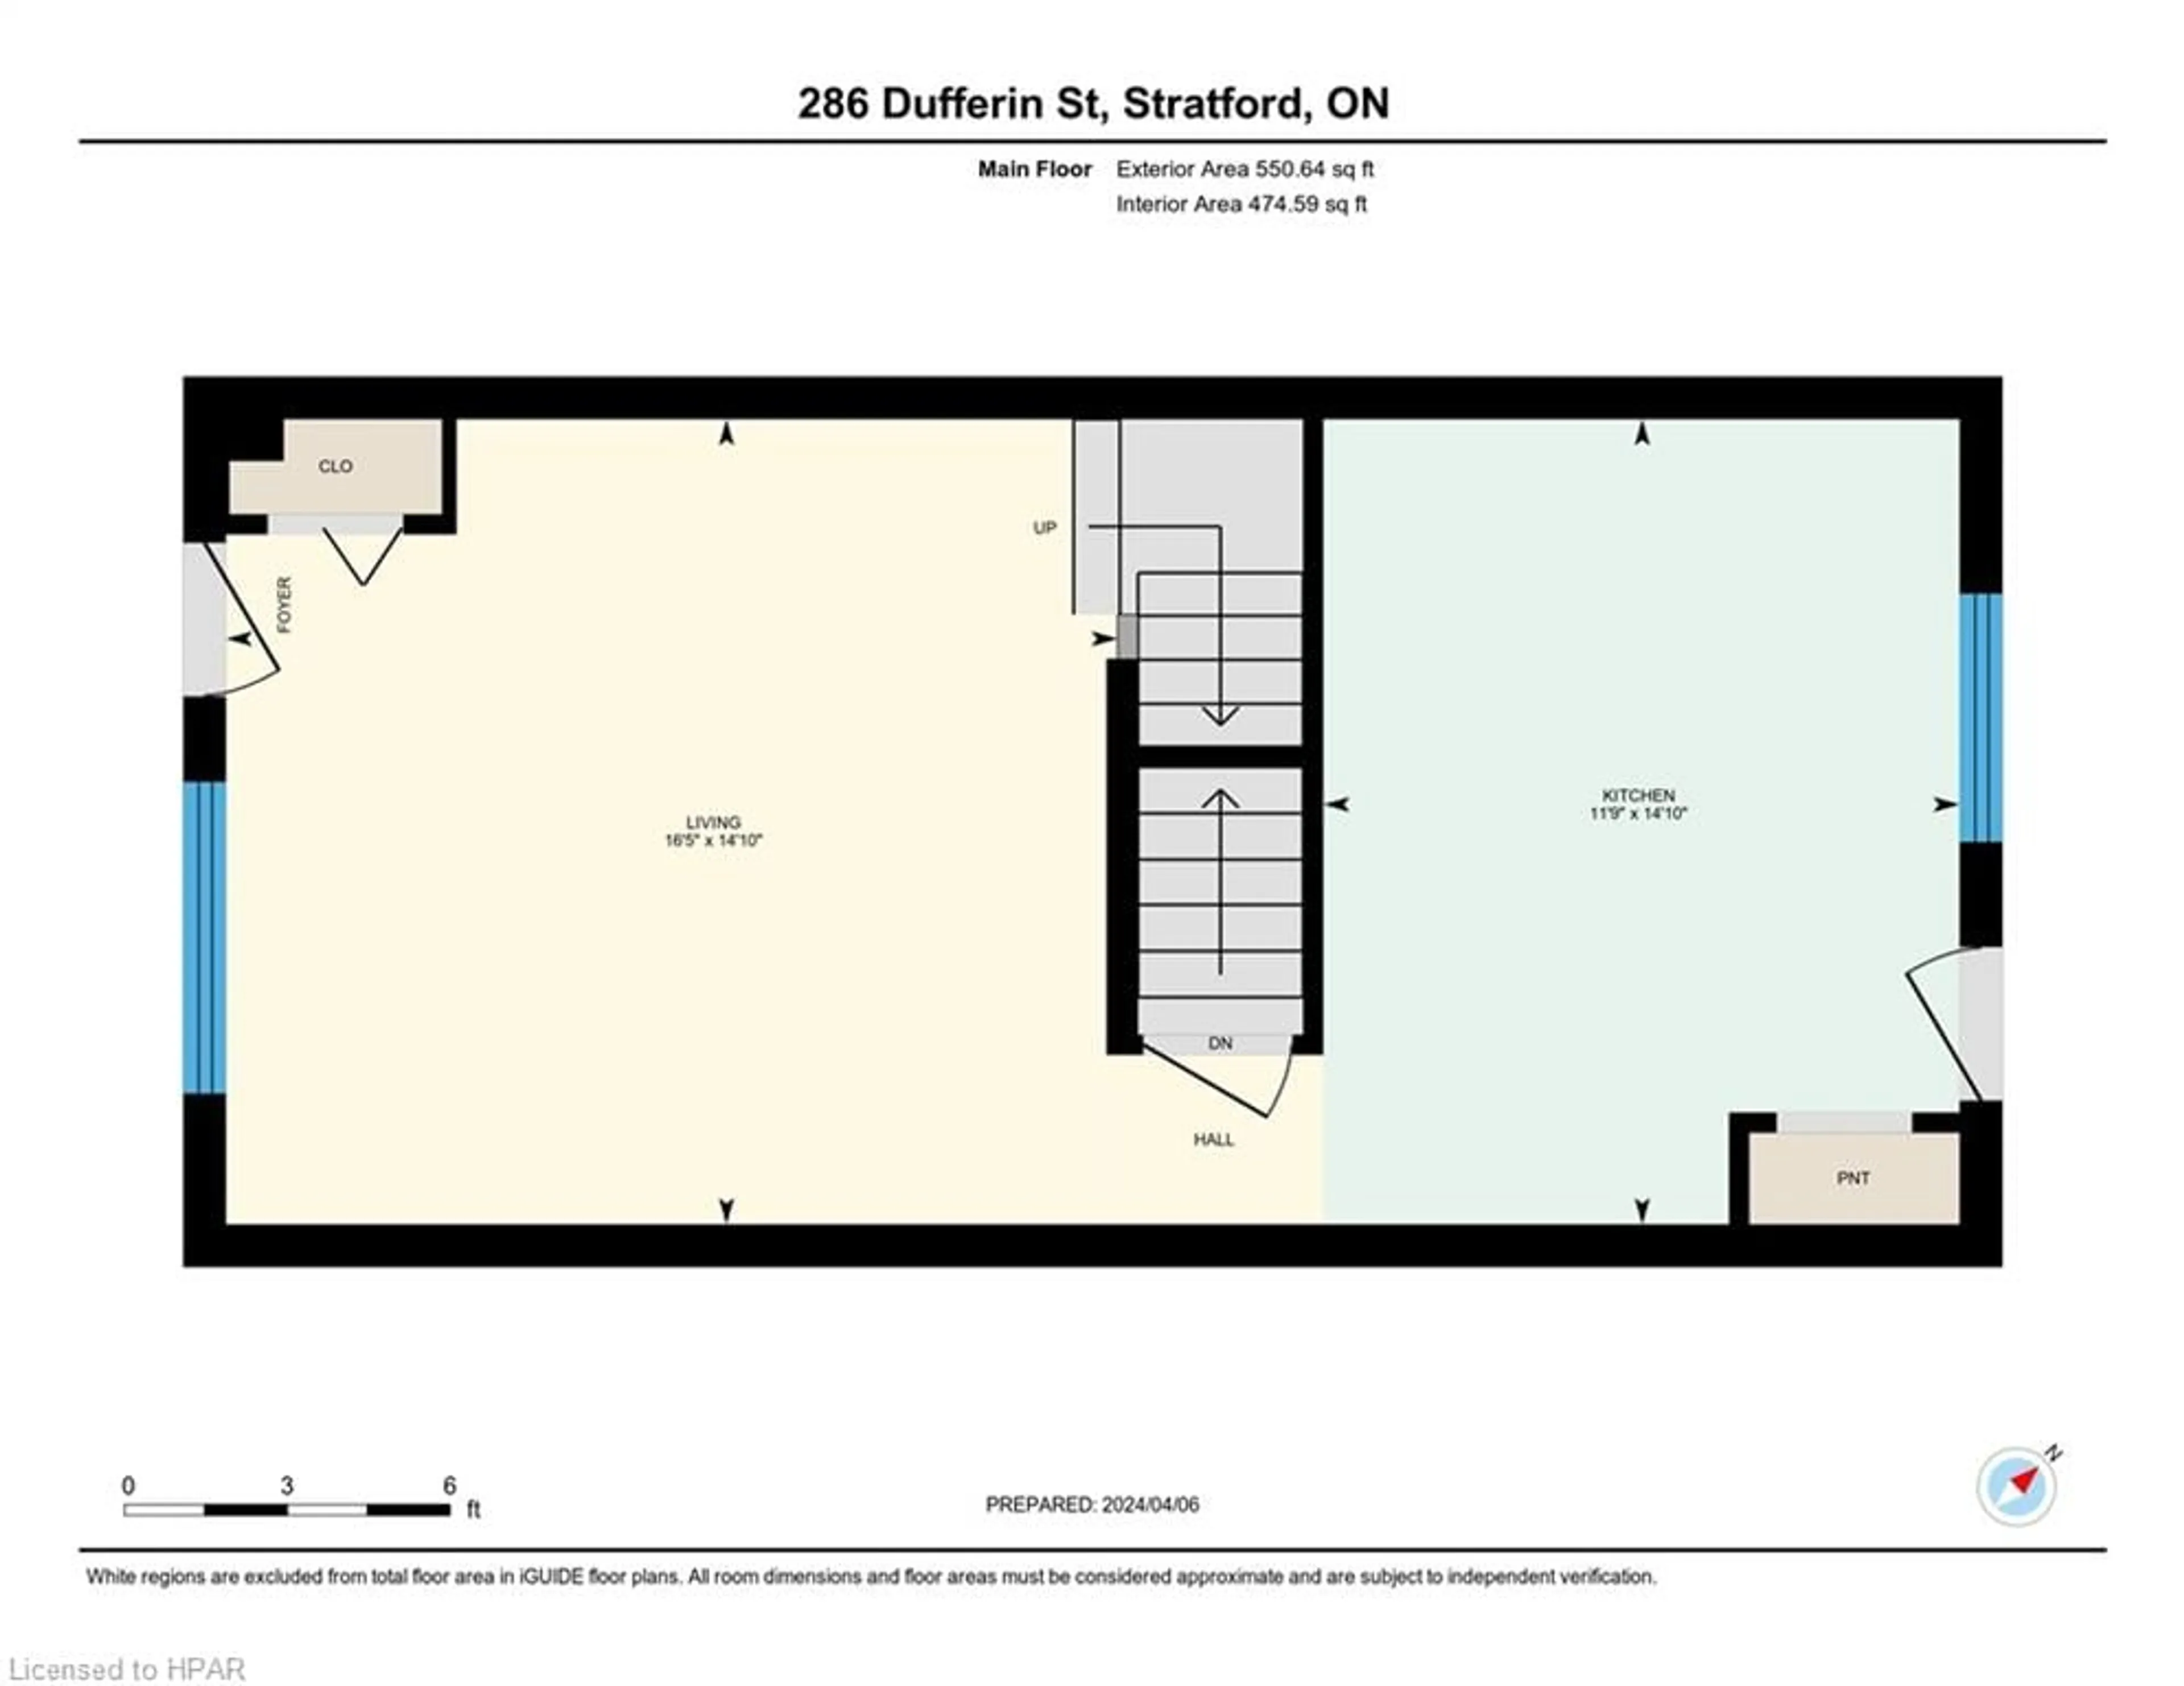 Floor plan for 286 Dufferin St, Stratford Ontario N5A 2H2